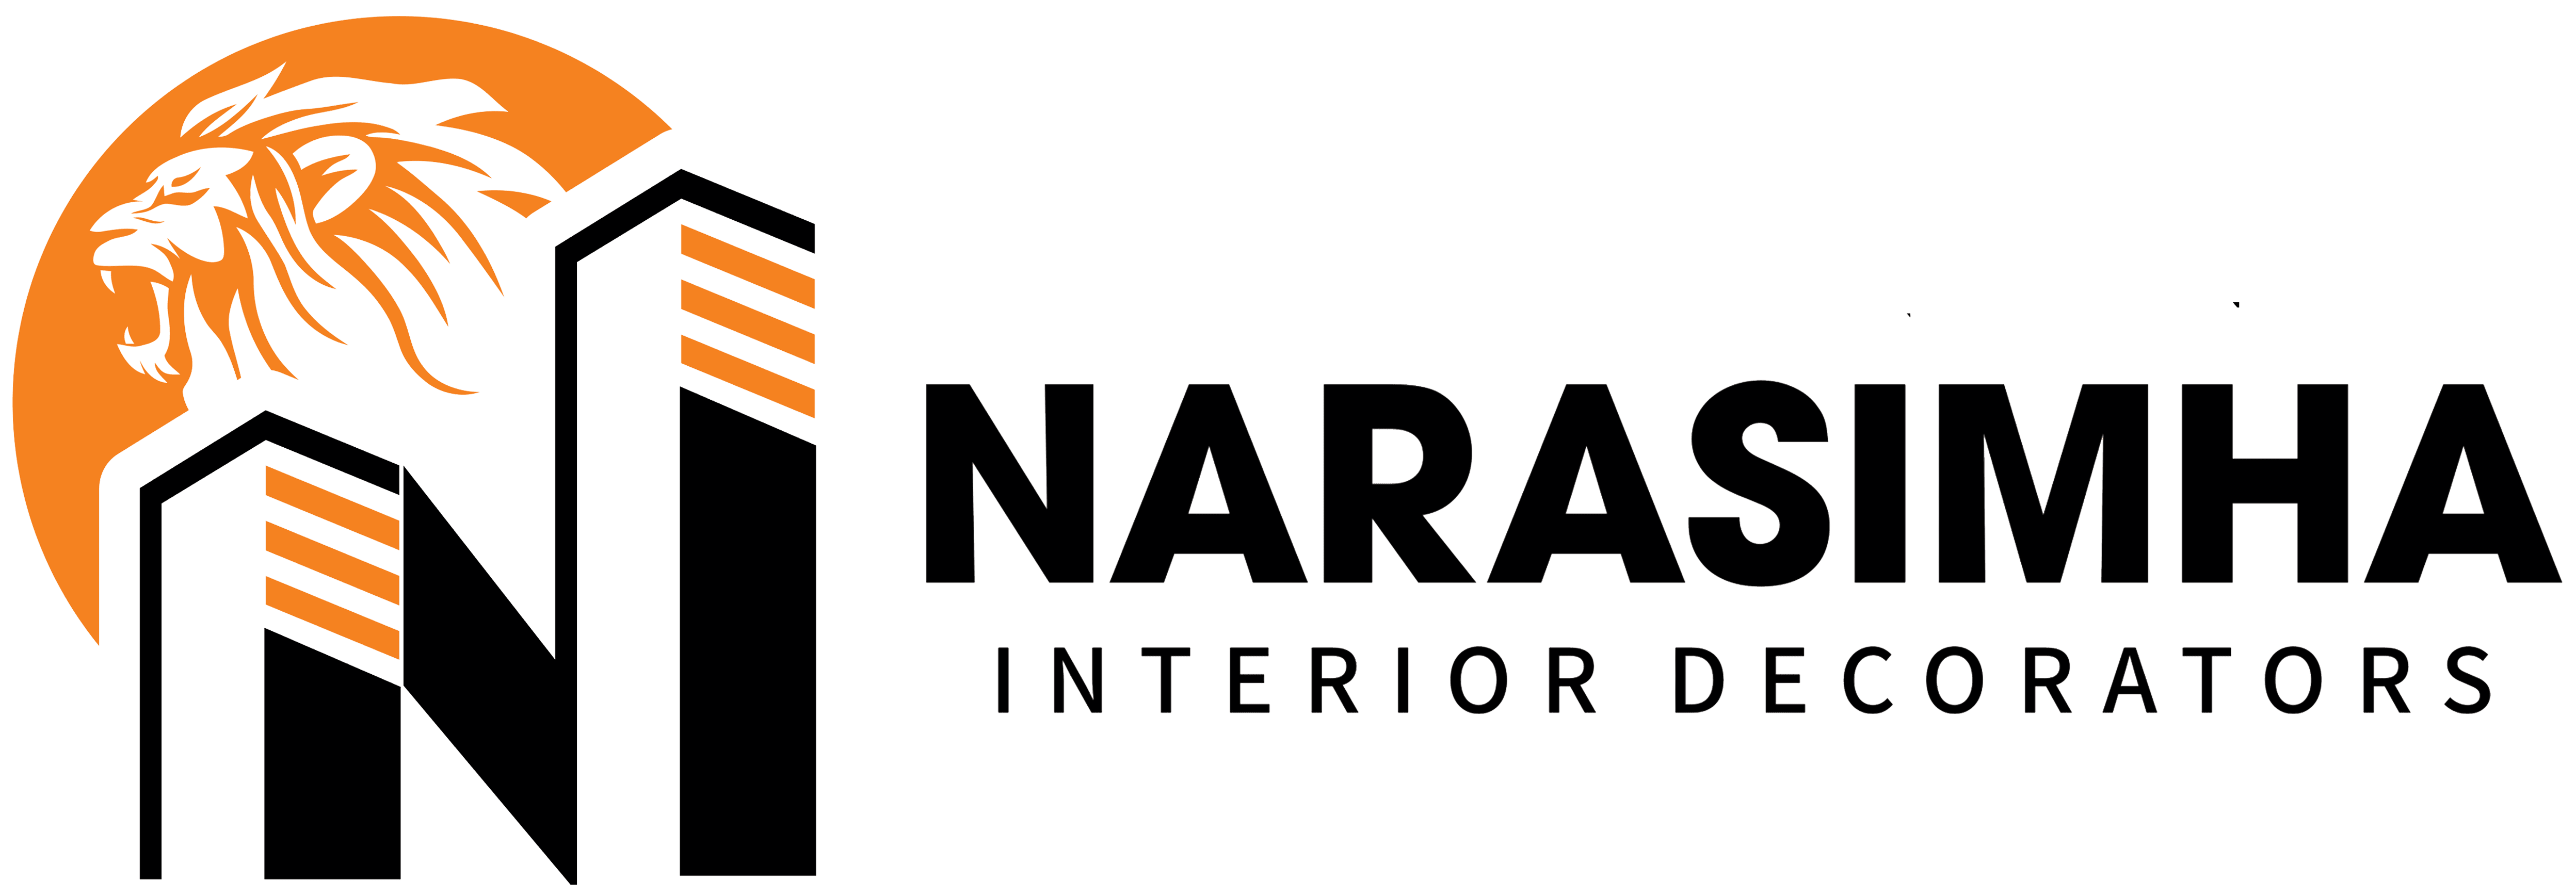 Narasimha Interior Decorators